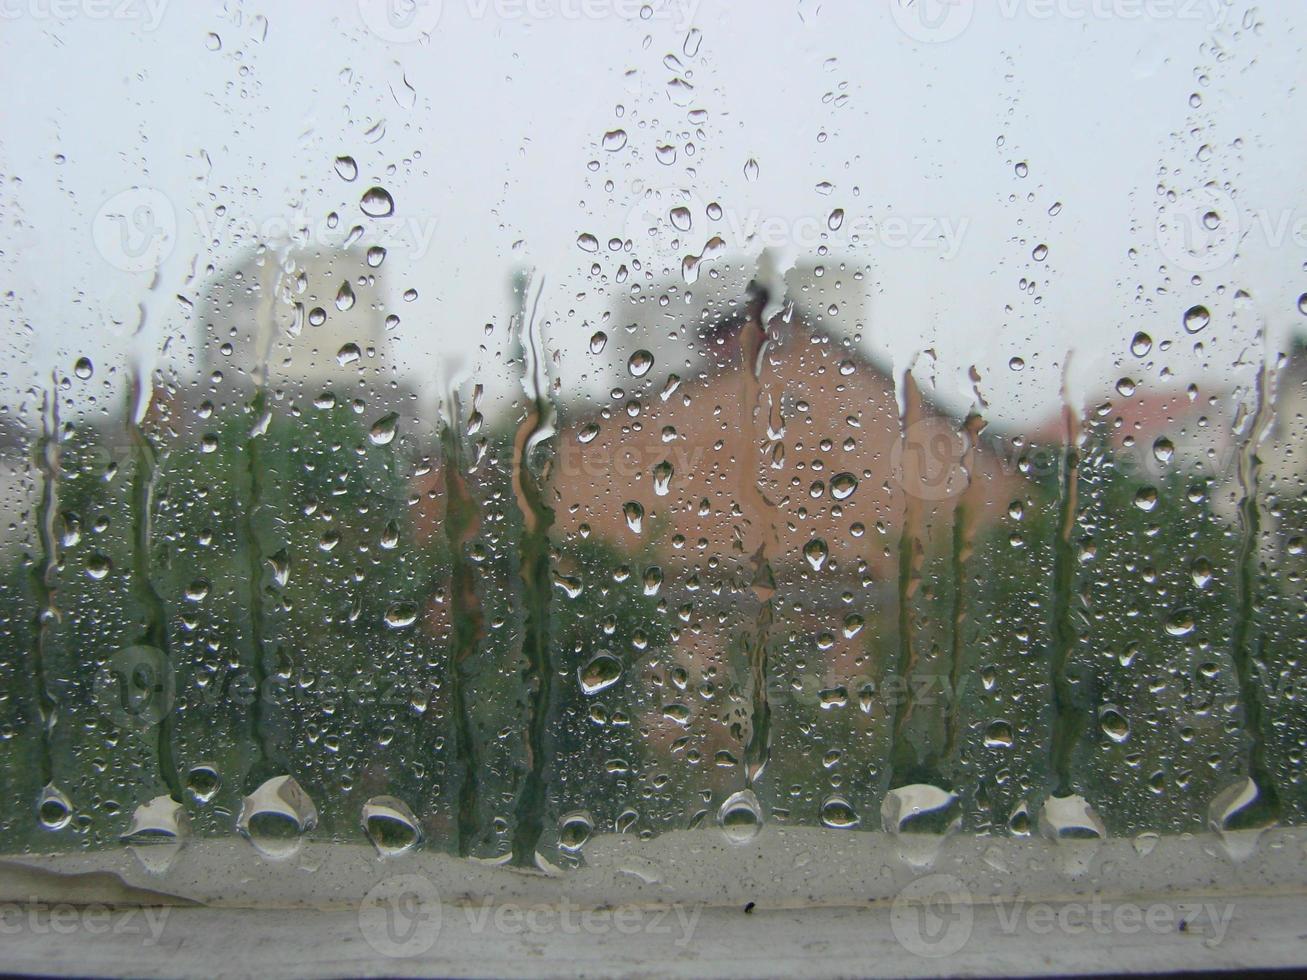 días de lluvia gotas de lluvia en la superficie de la ventana foto